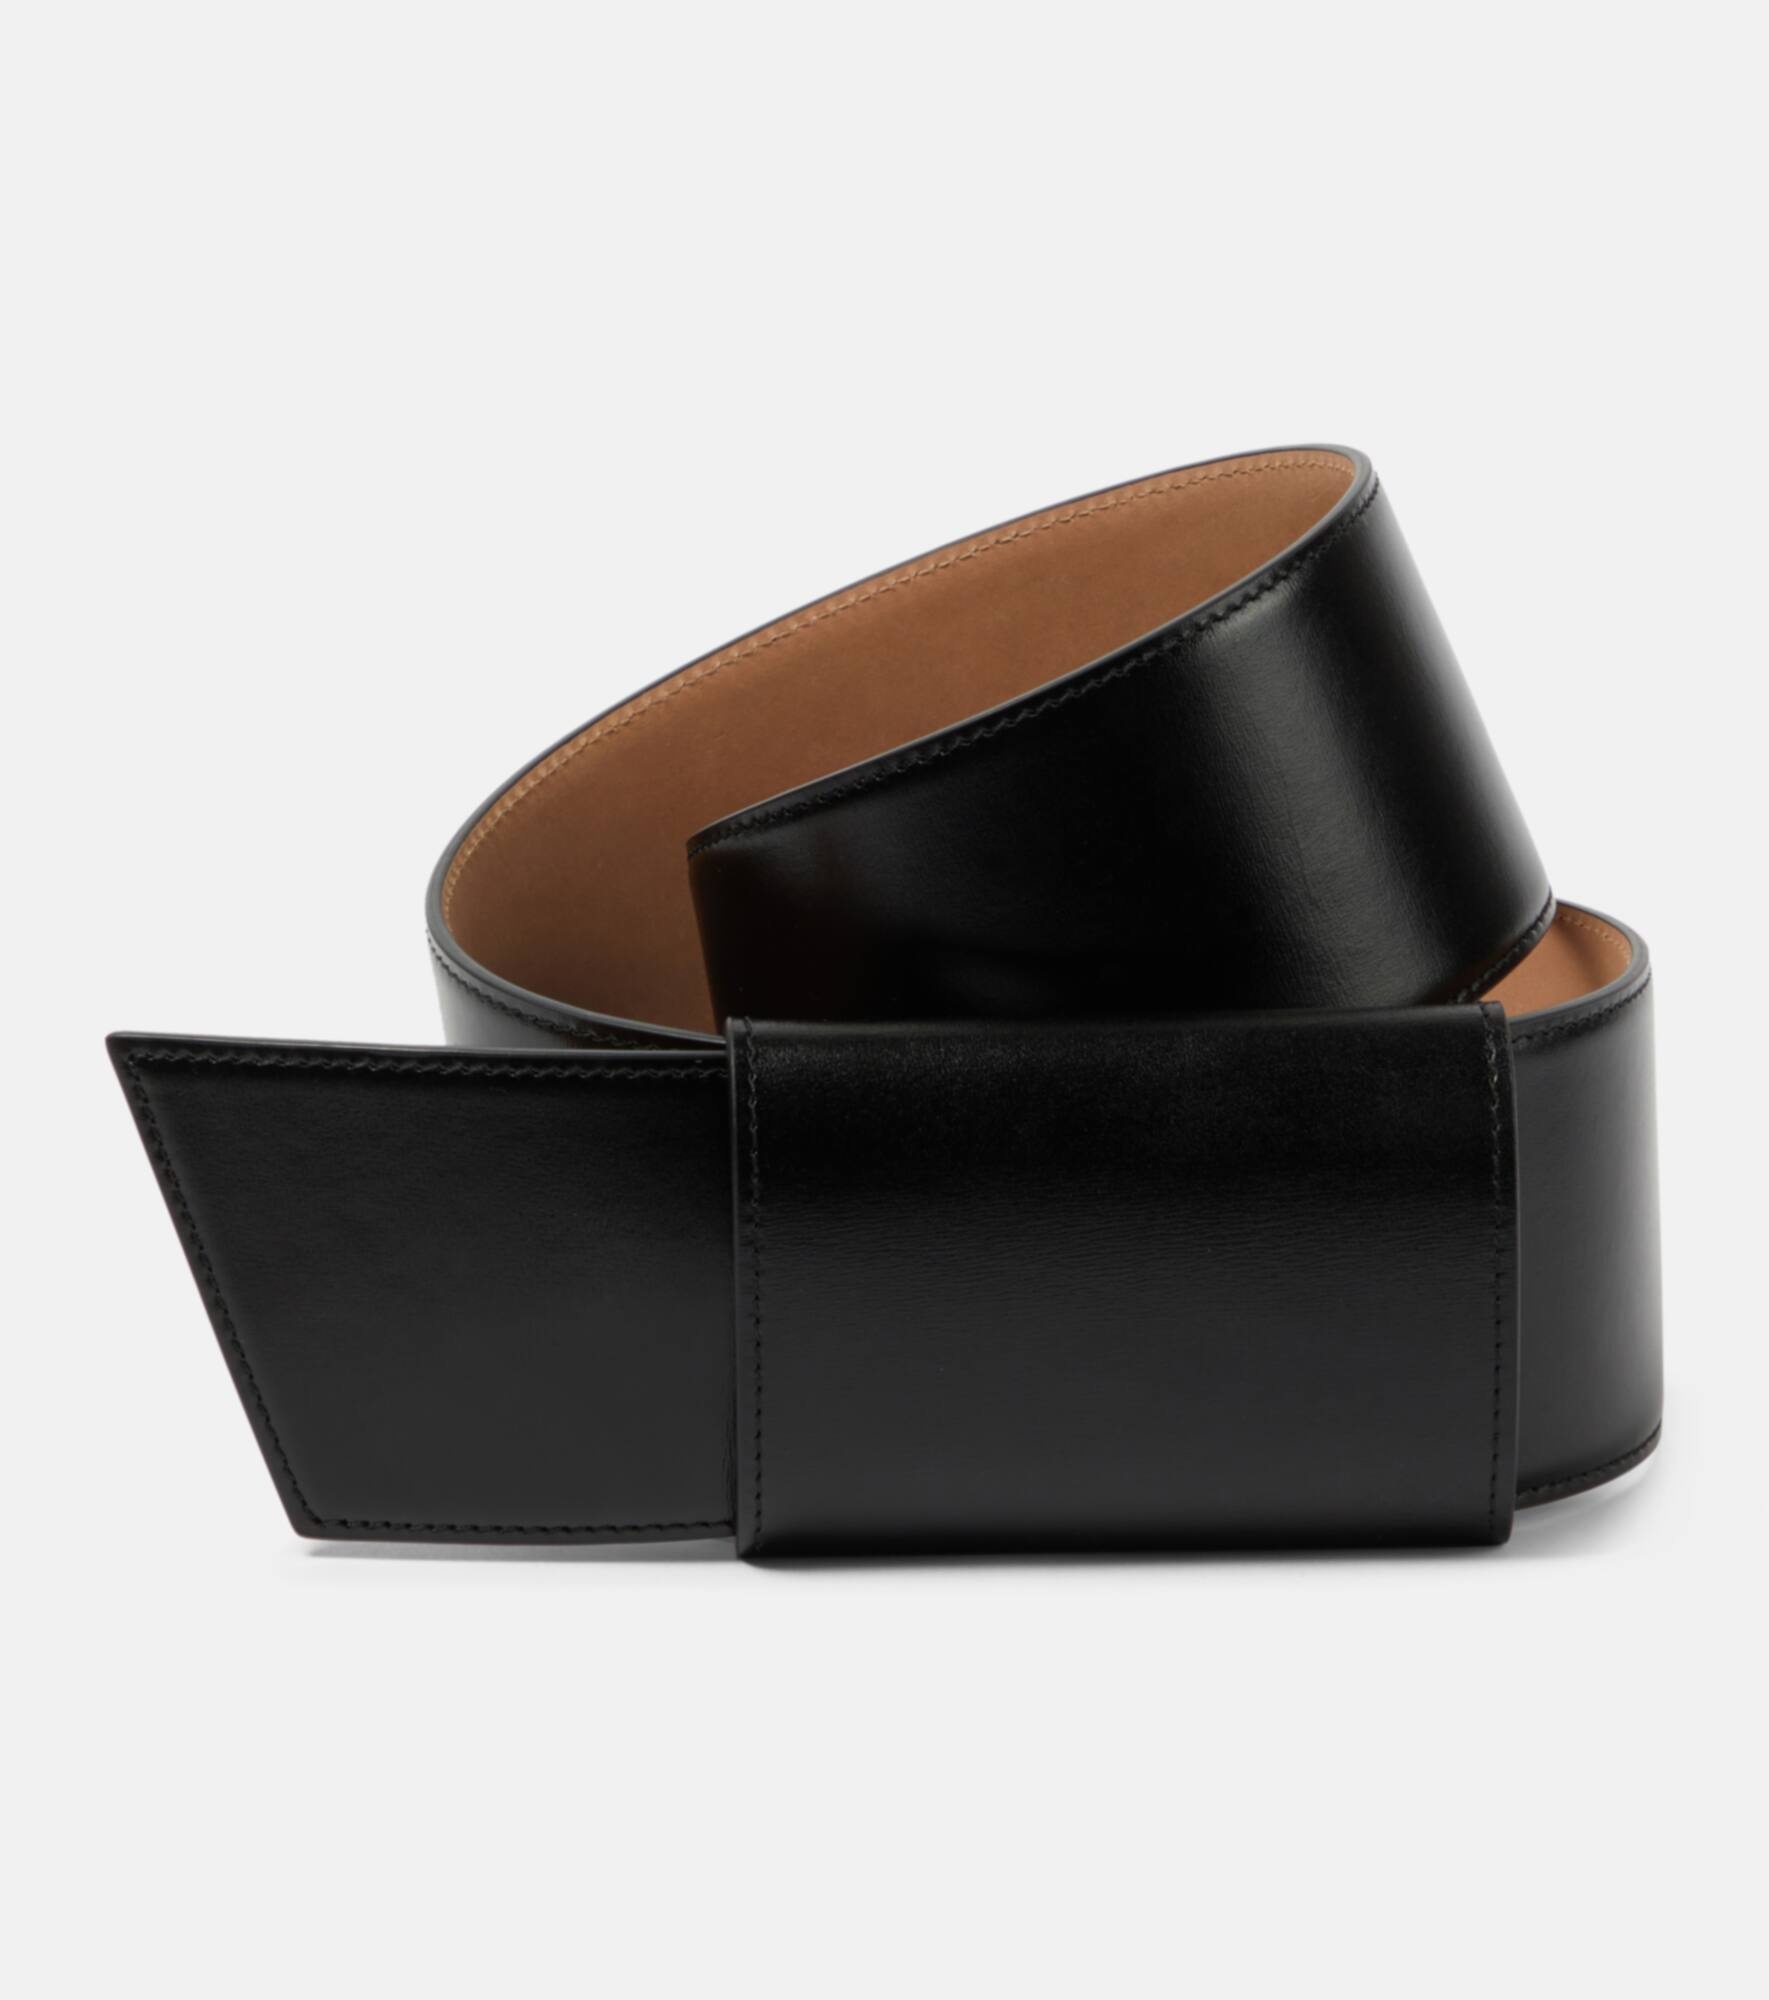 Knot leather belt - 1